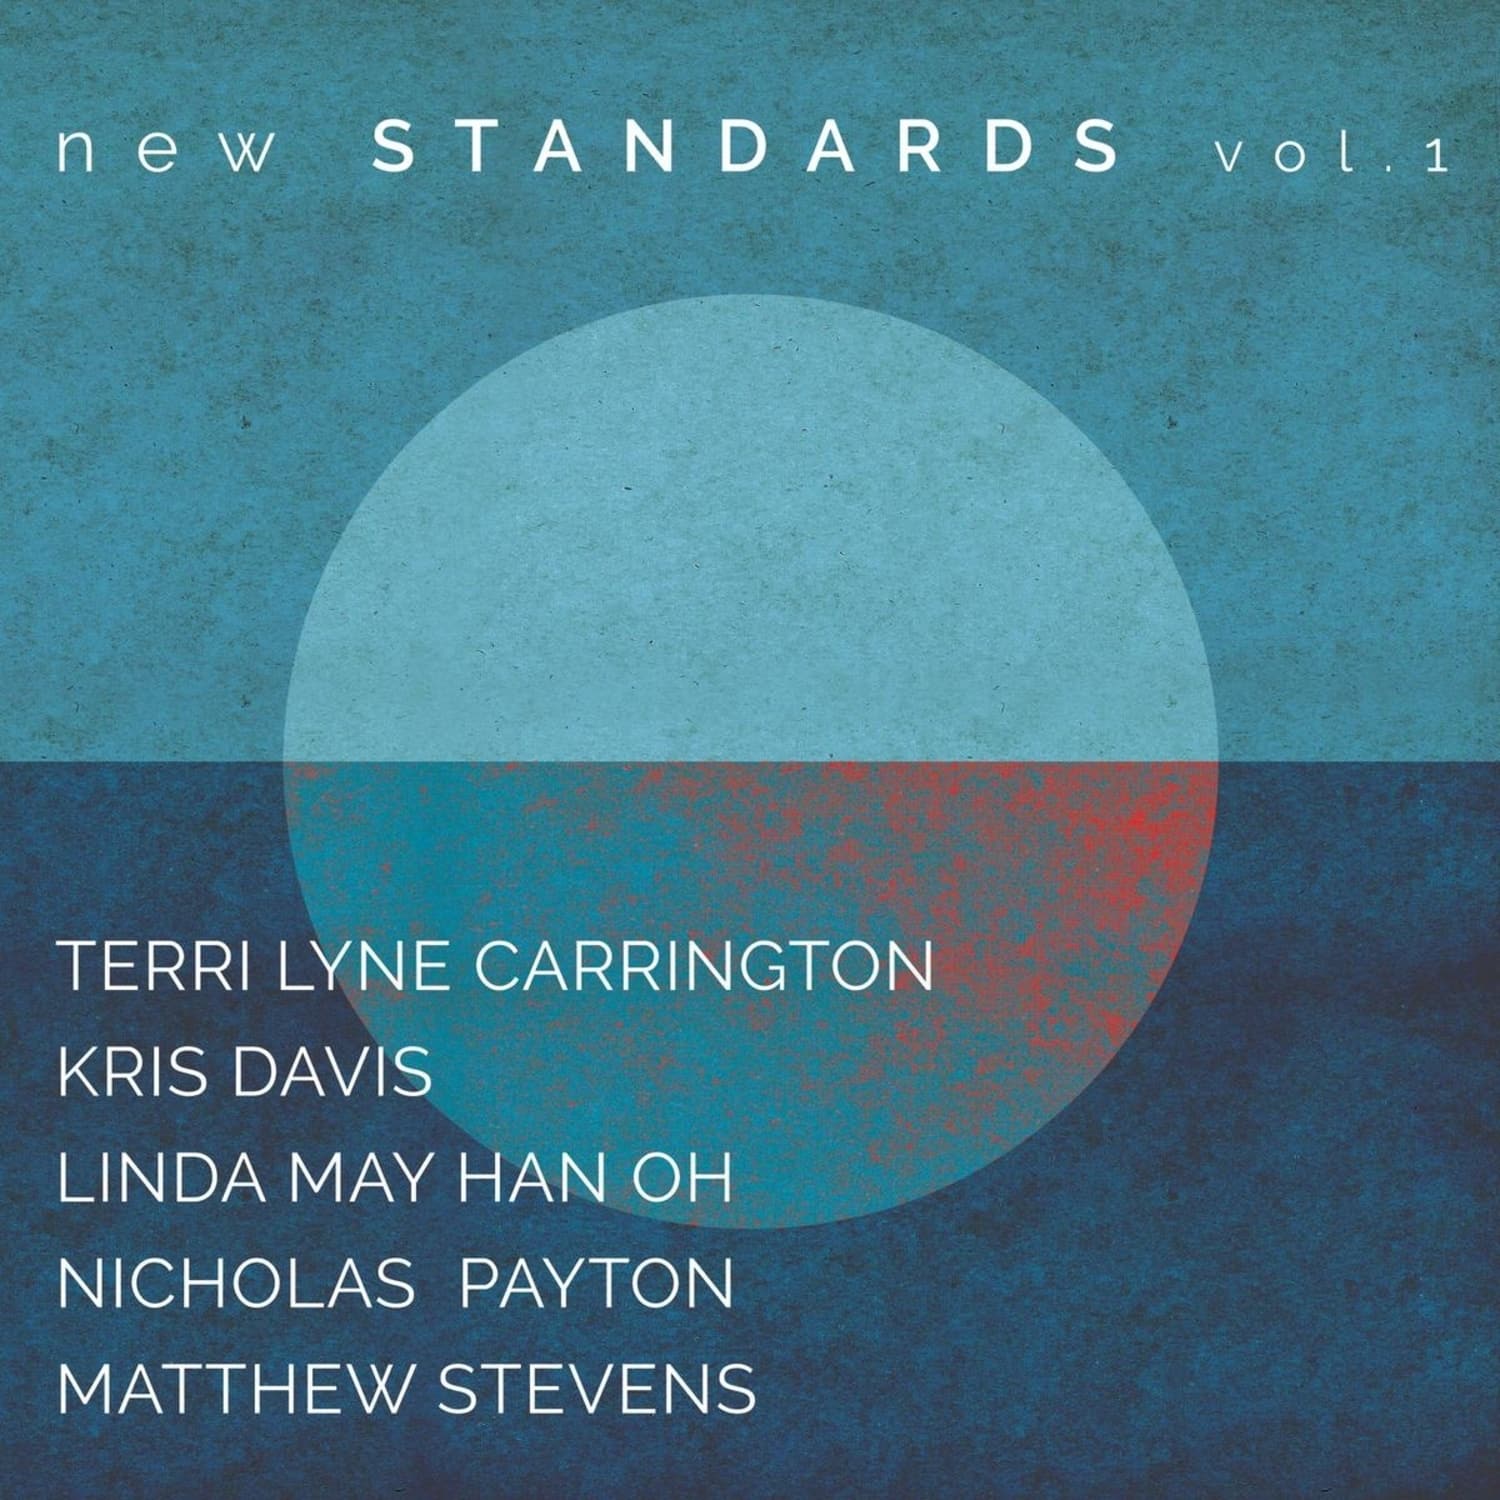 Terri Lyne Carrington - NEW STANDARDS VOL.1 